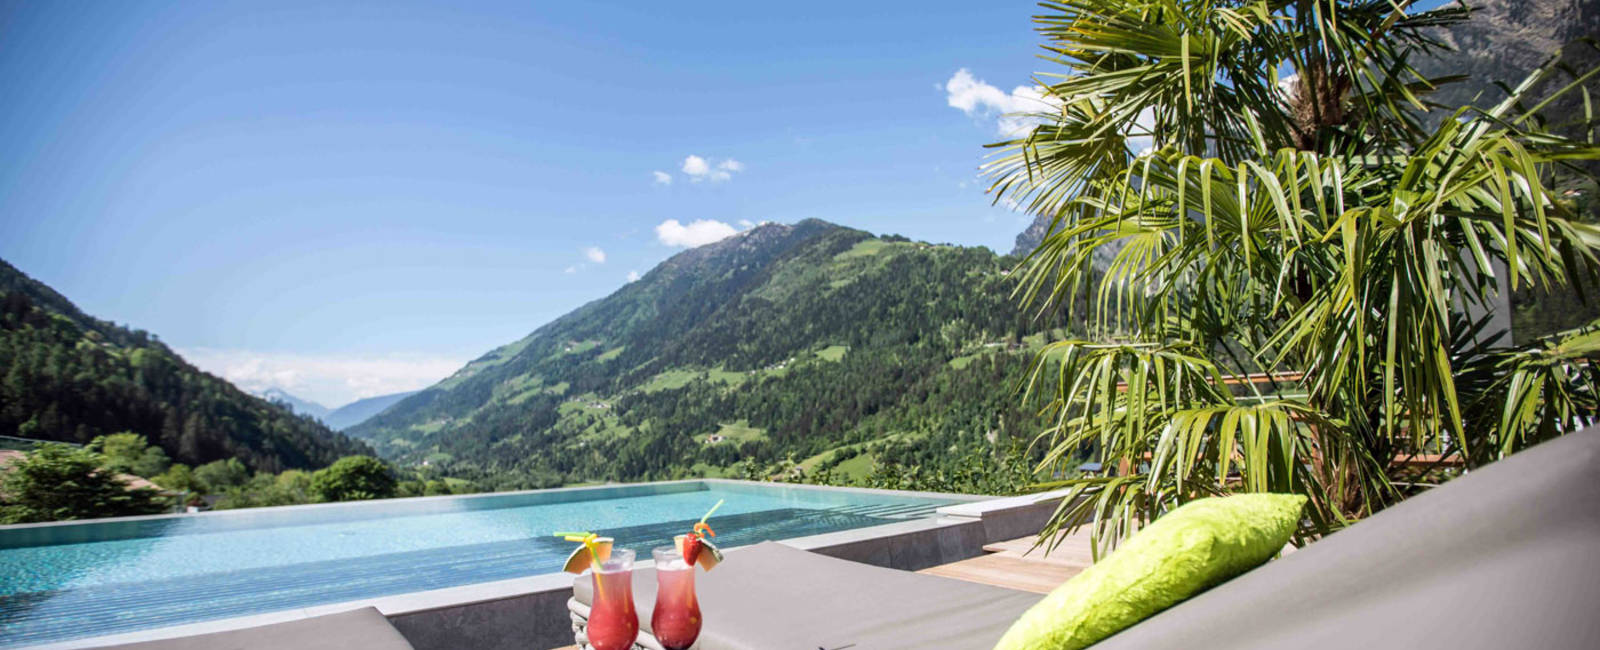  Südtirol 

Die besten Hotels in Südtirol